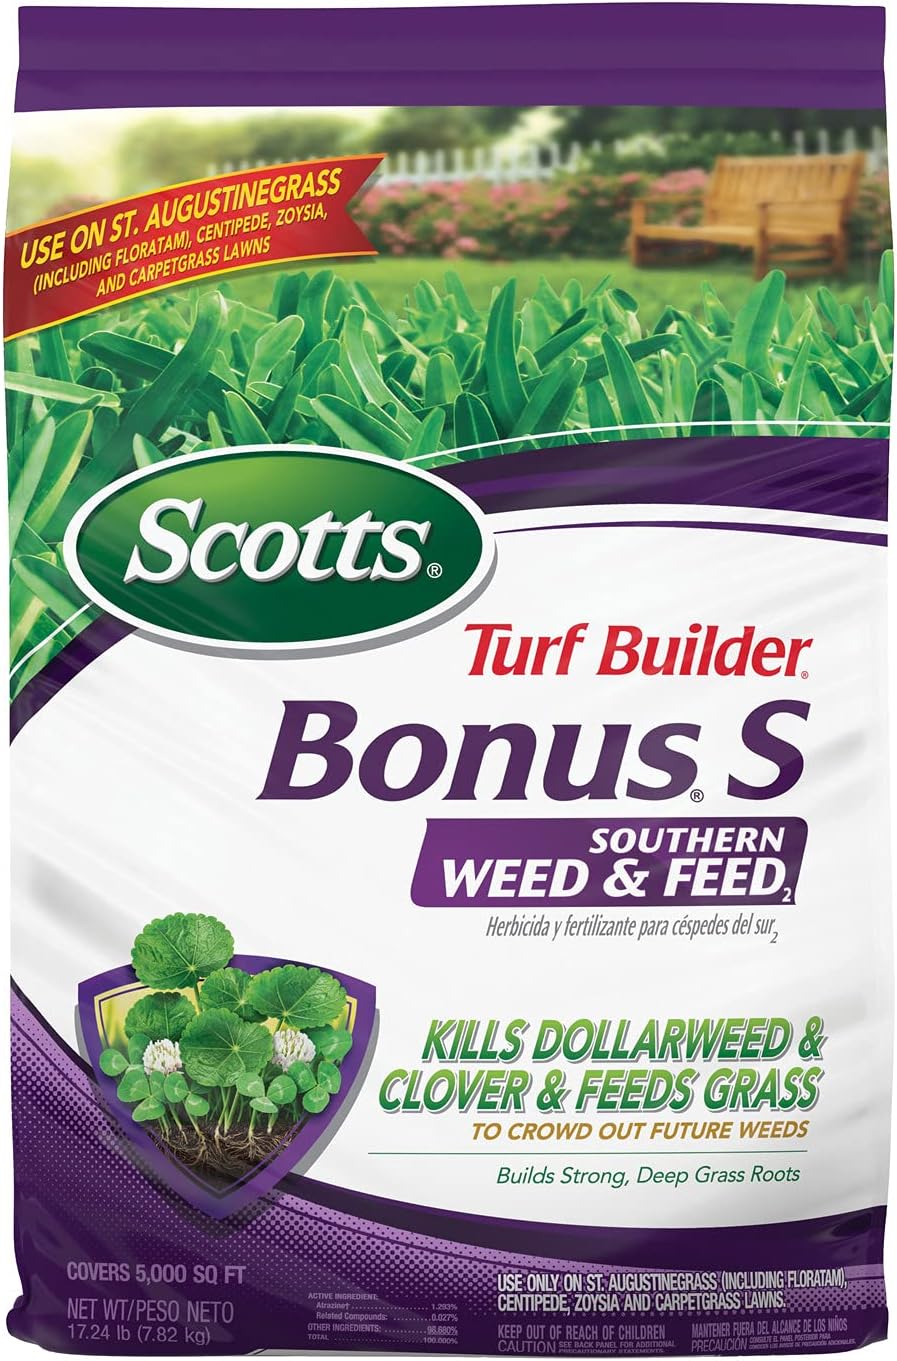 Scotts Turf Builder Bonus S Southern Weed & Feed2, [...]